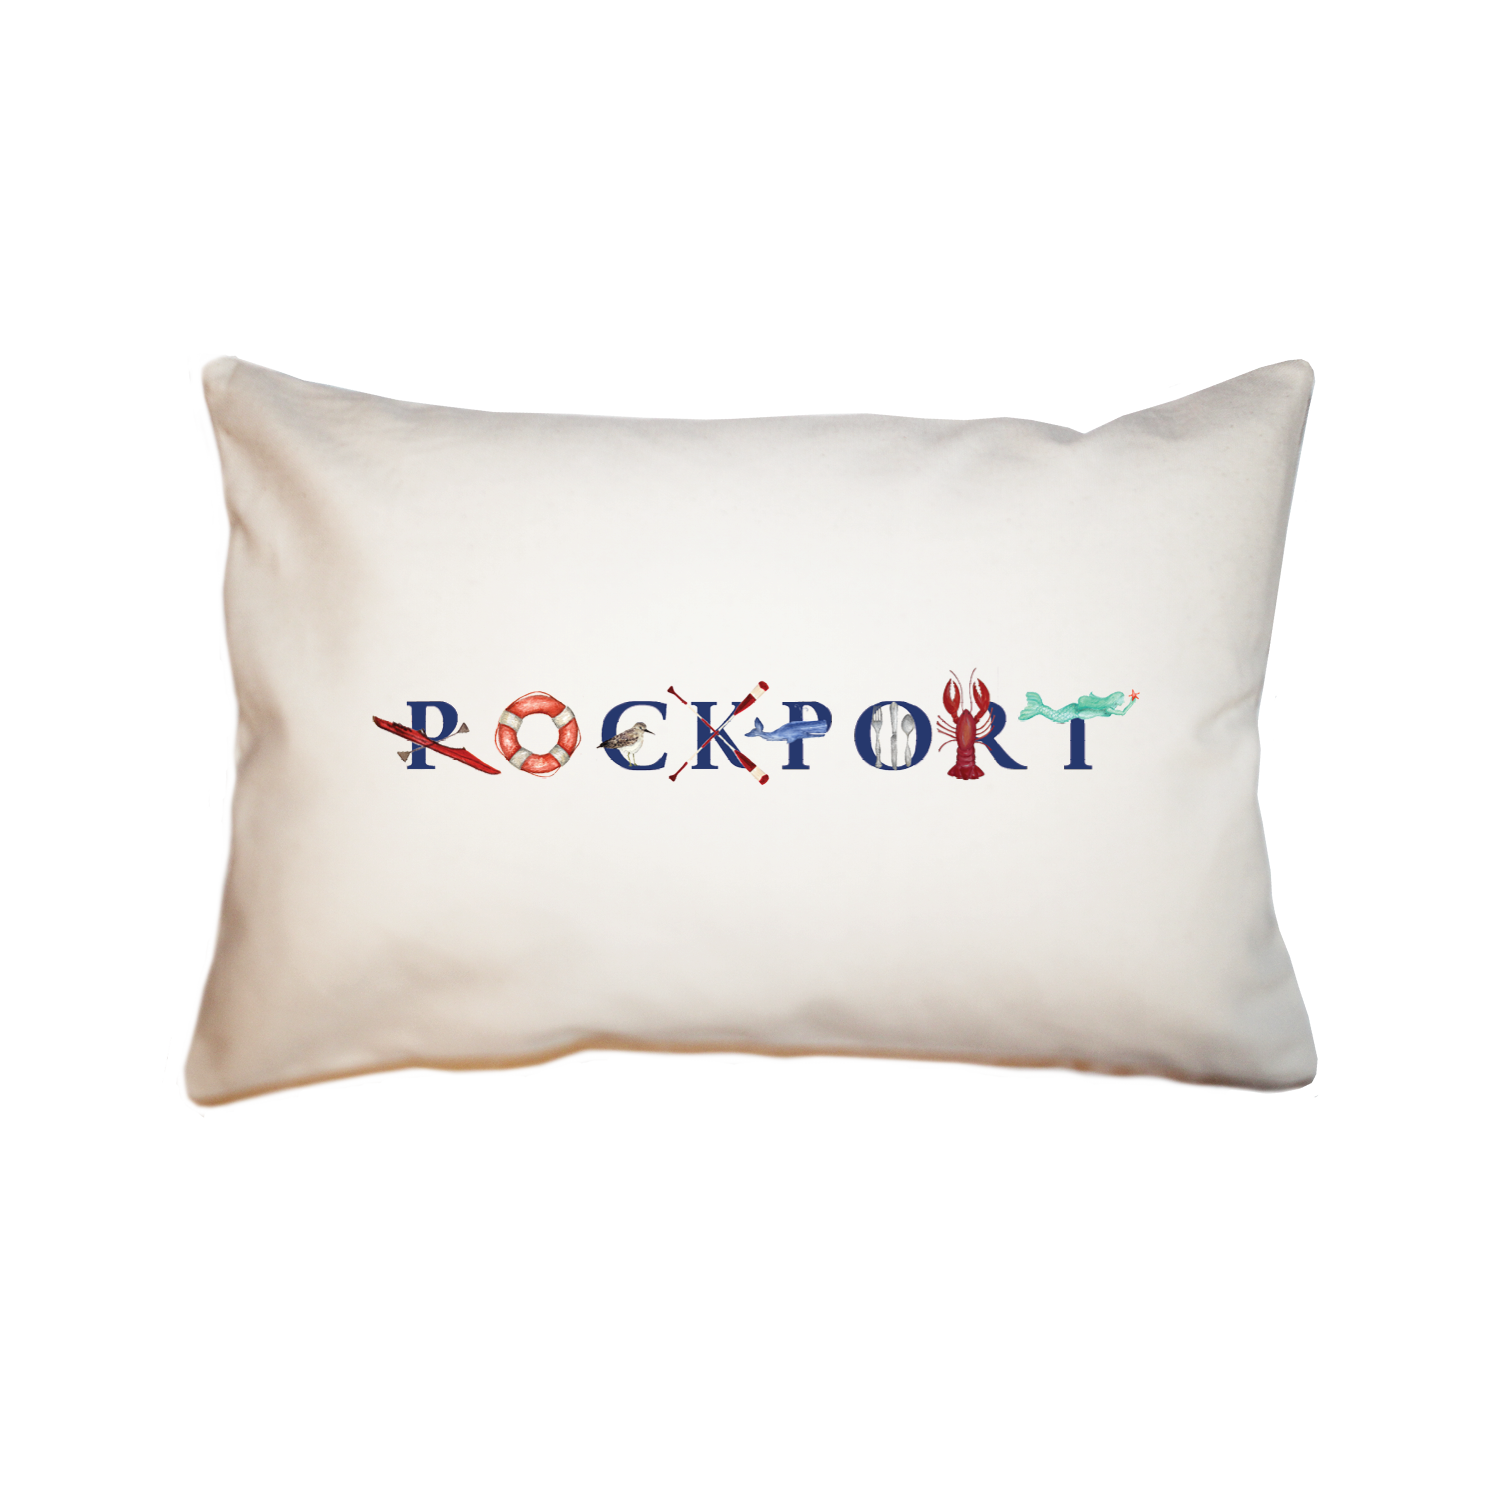 Rockport large rectangle pillow